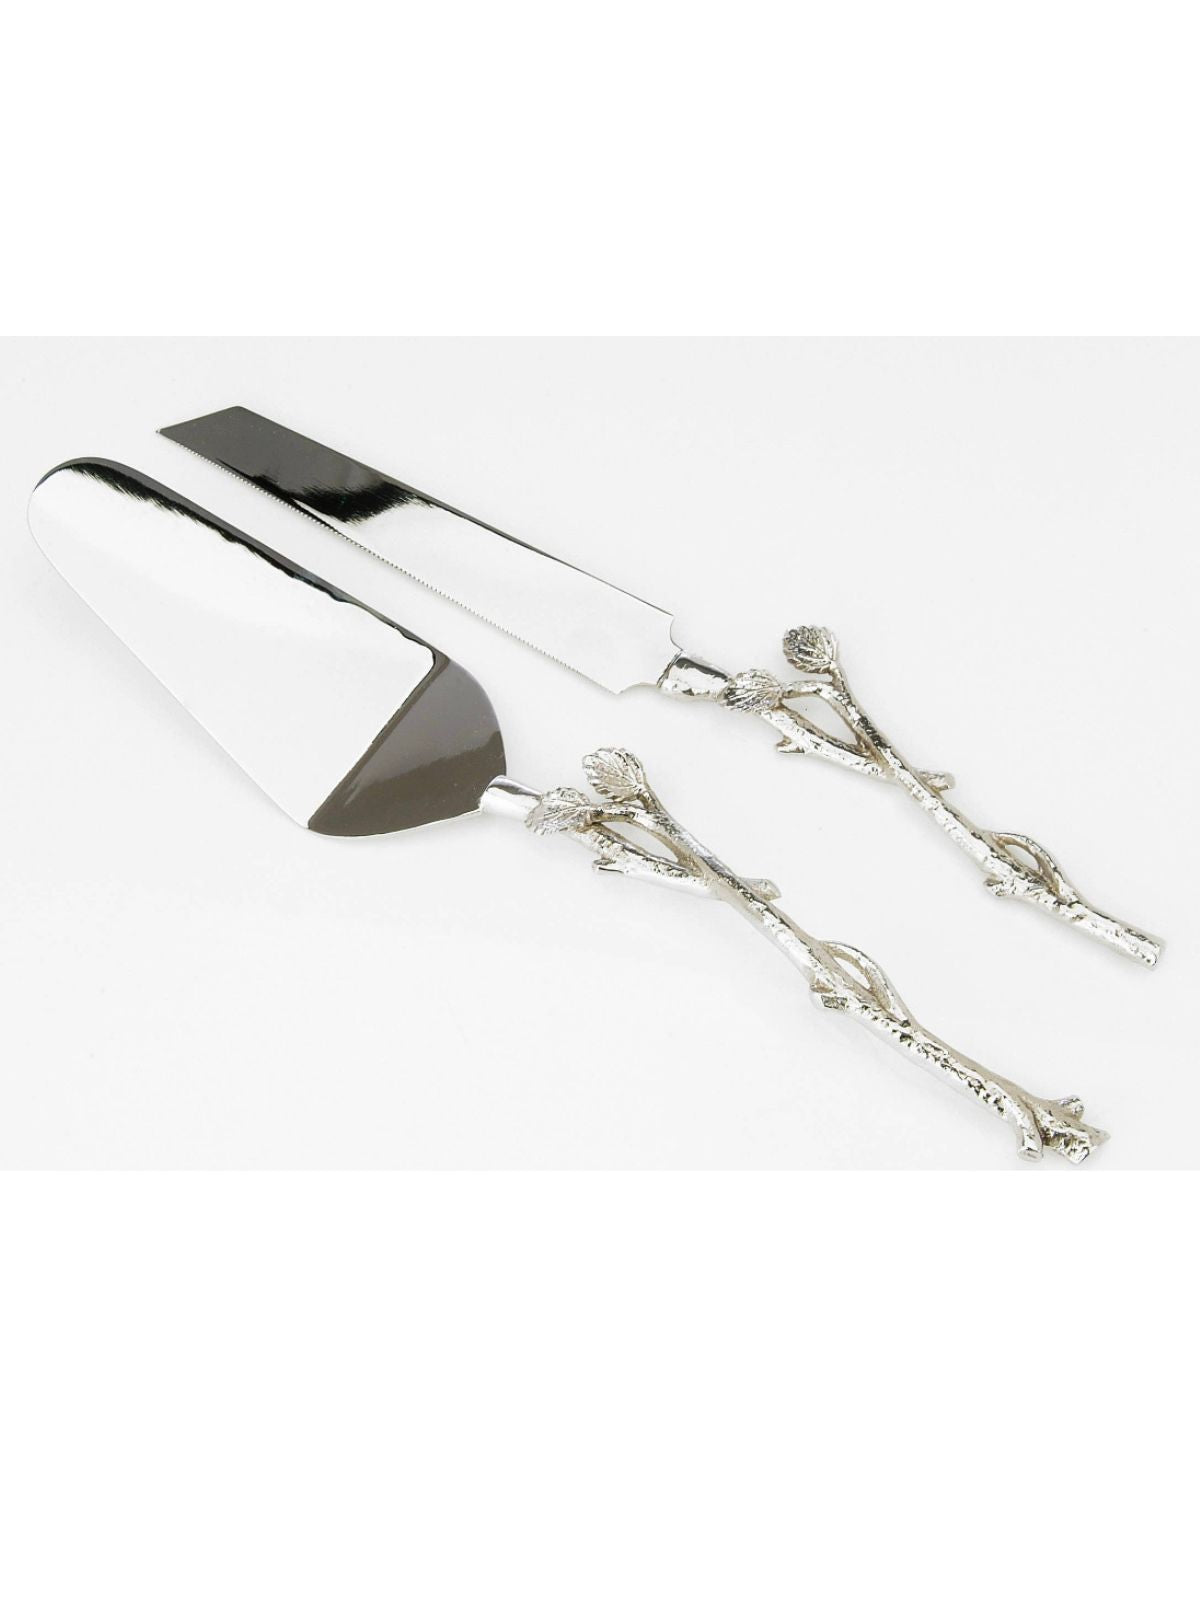 Cake Server and Knife Set With Silver Branch Leaf Designed Handles.